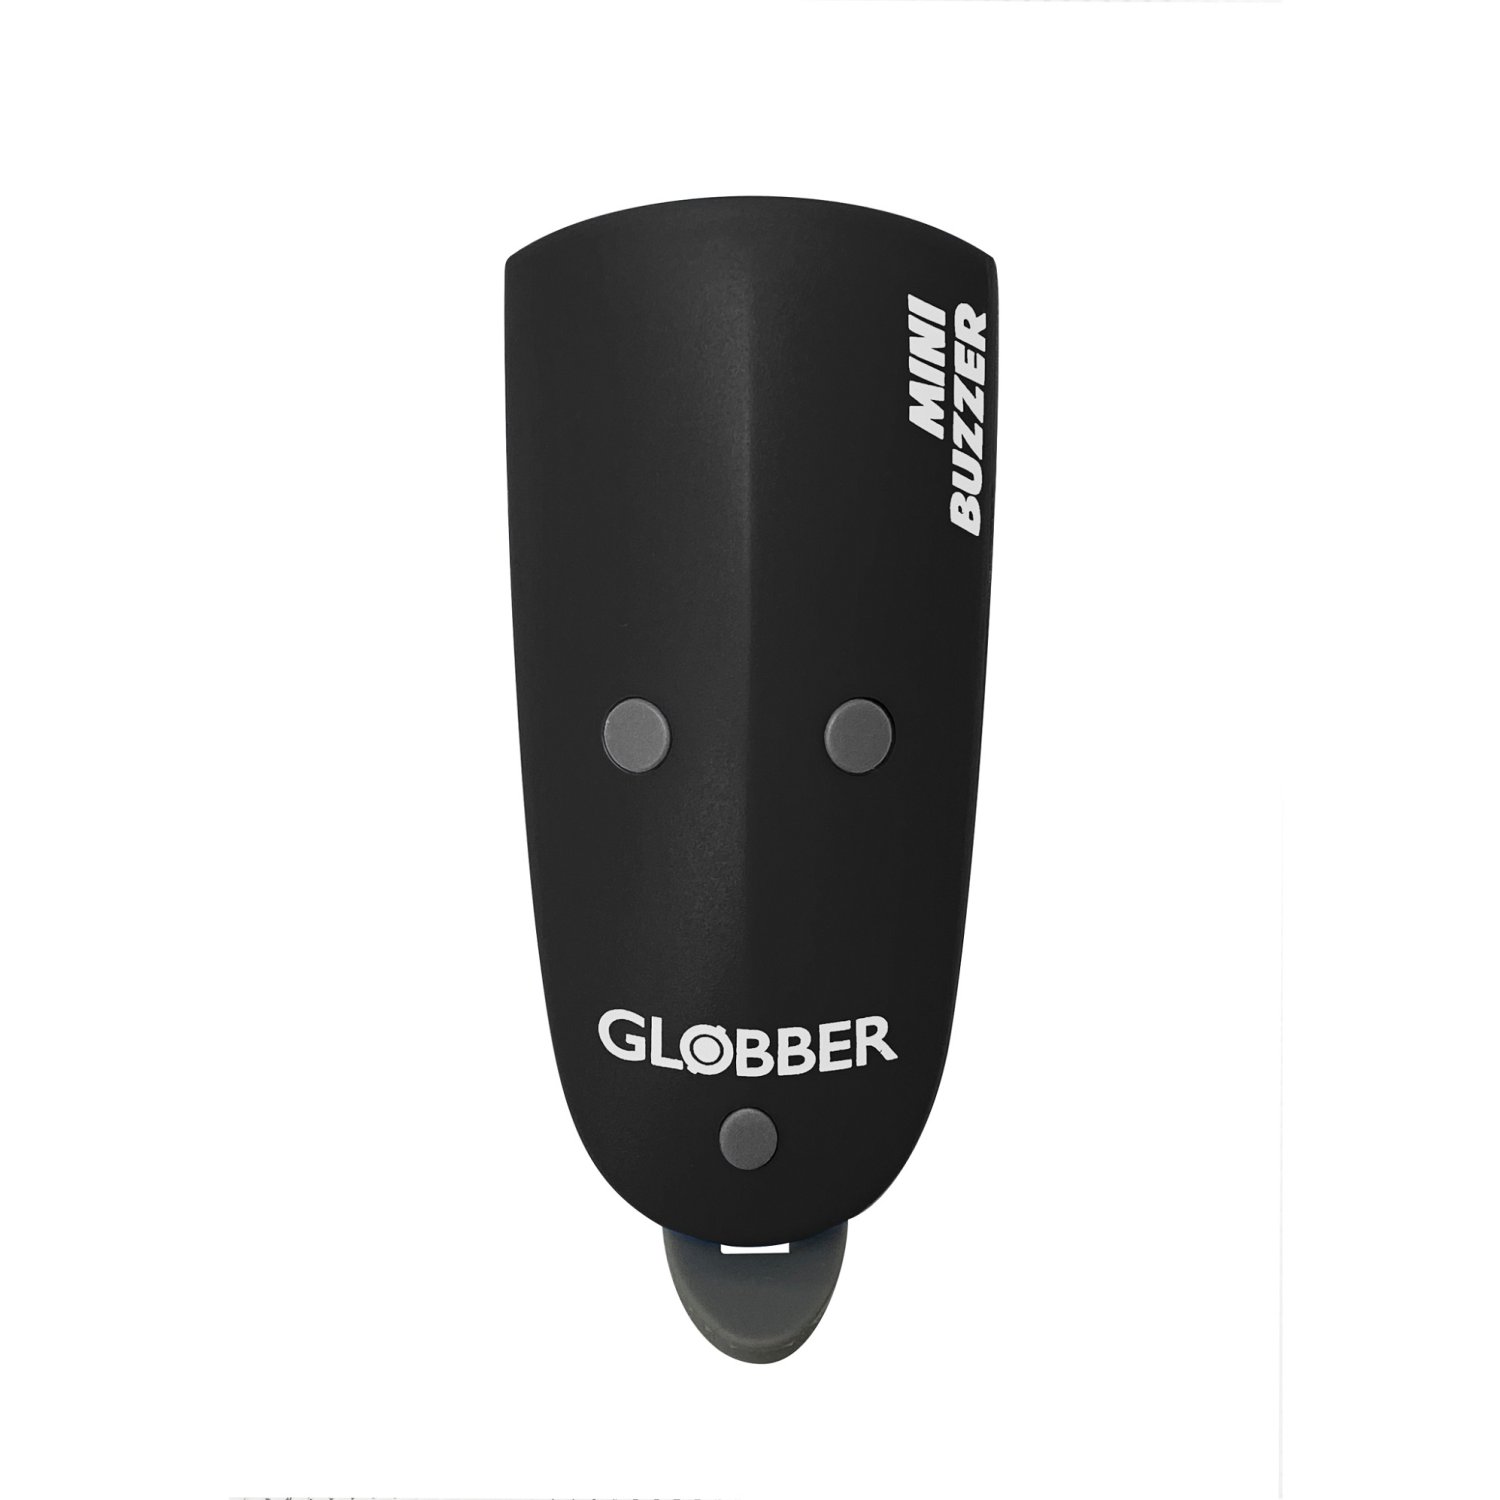 Звонок-фонарик велосипедный Globber MINI BUZZER, черный, 530-120 10pcs 0905 3v 5v 12v active alarm buzzer beeper 9 5 5mm tmb09a05 3 5 12 v mini active piezo buzzer fit for aduino diy electronic